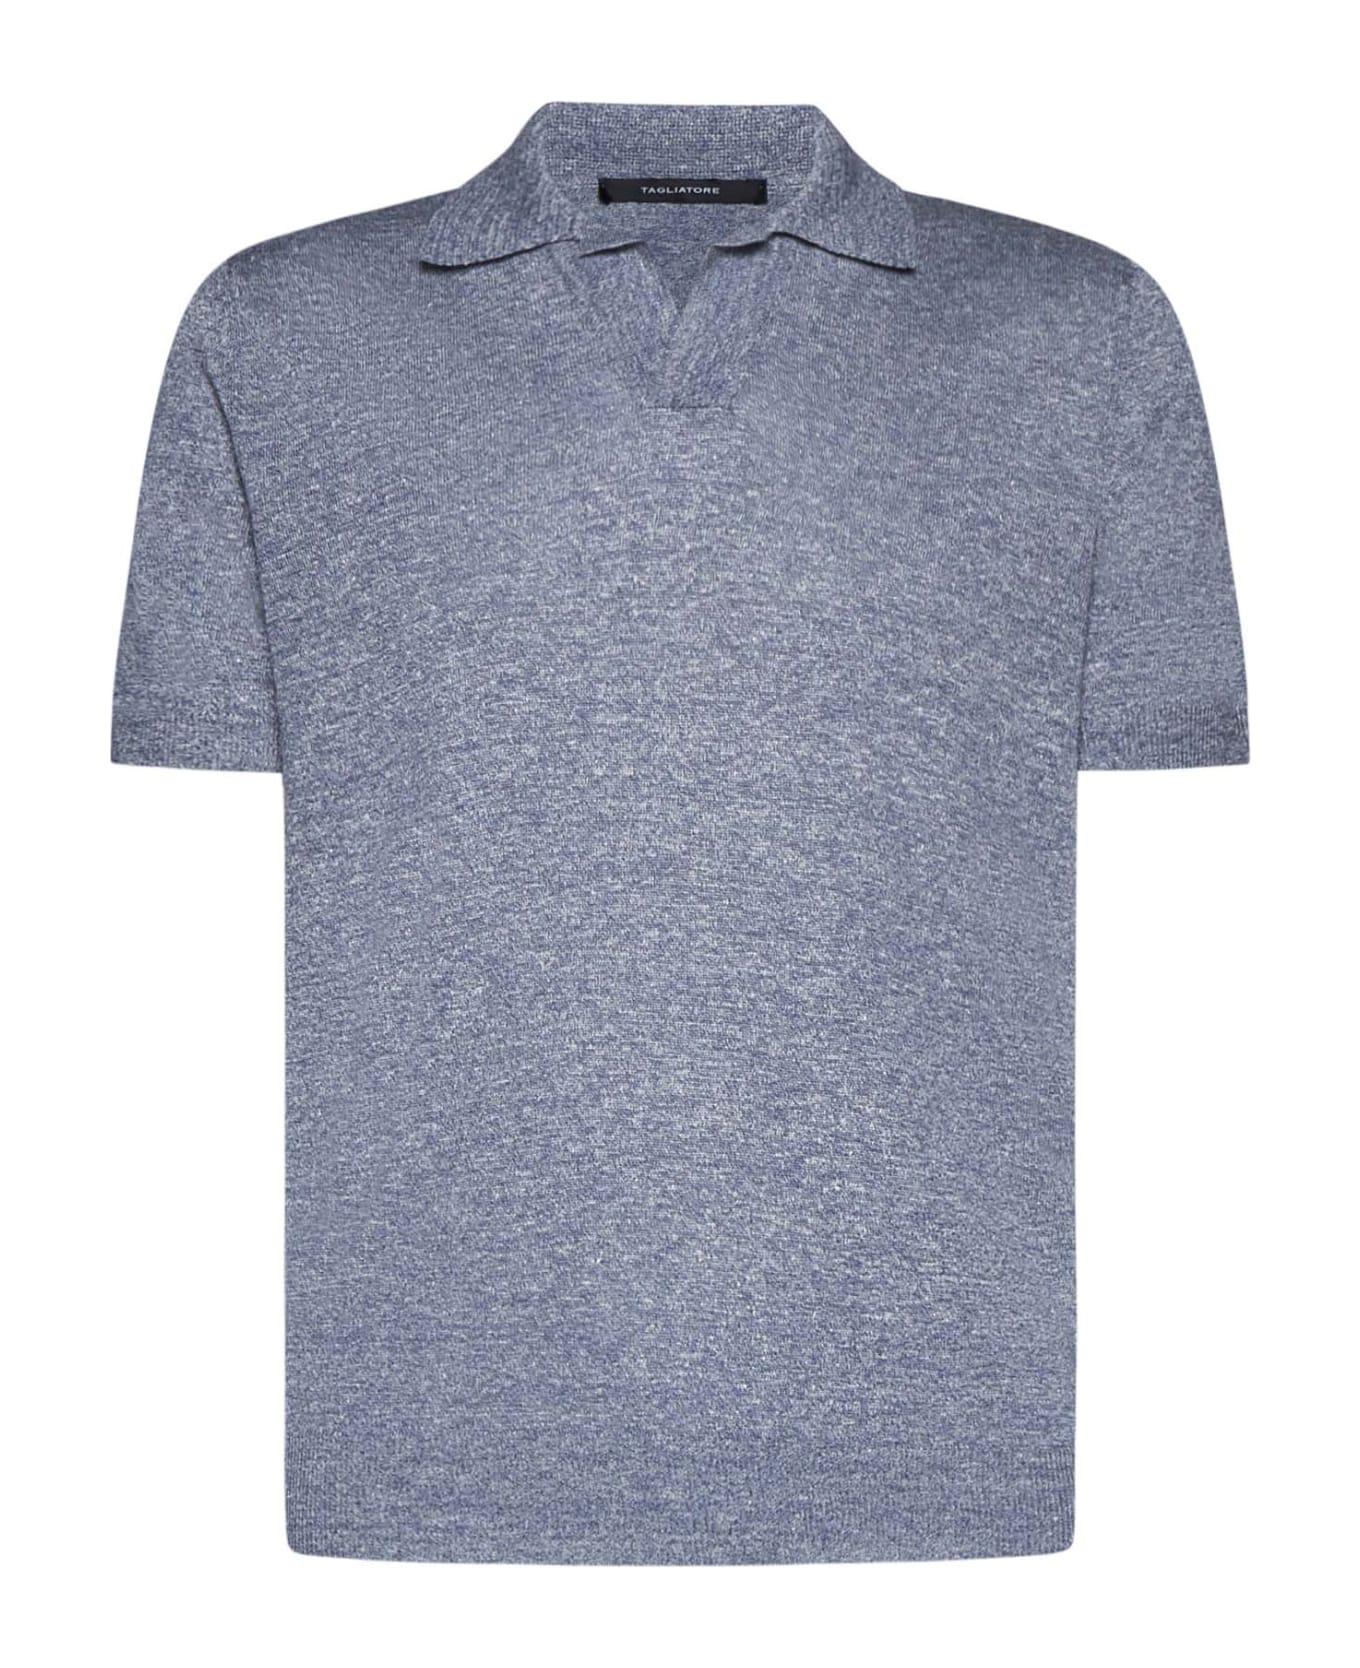 Tagliatore Polo Shirt - Indaco melange ポロシャツ